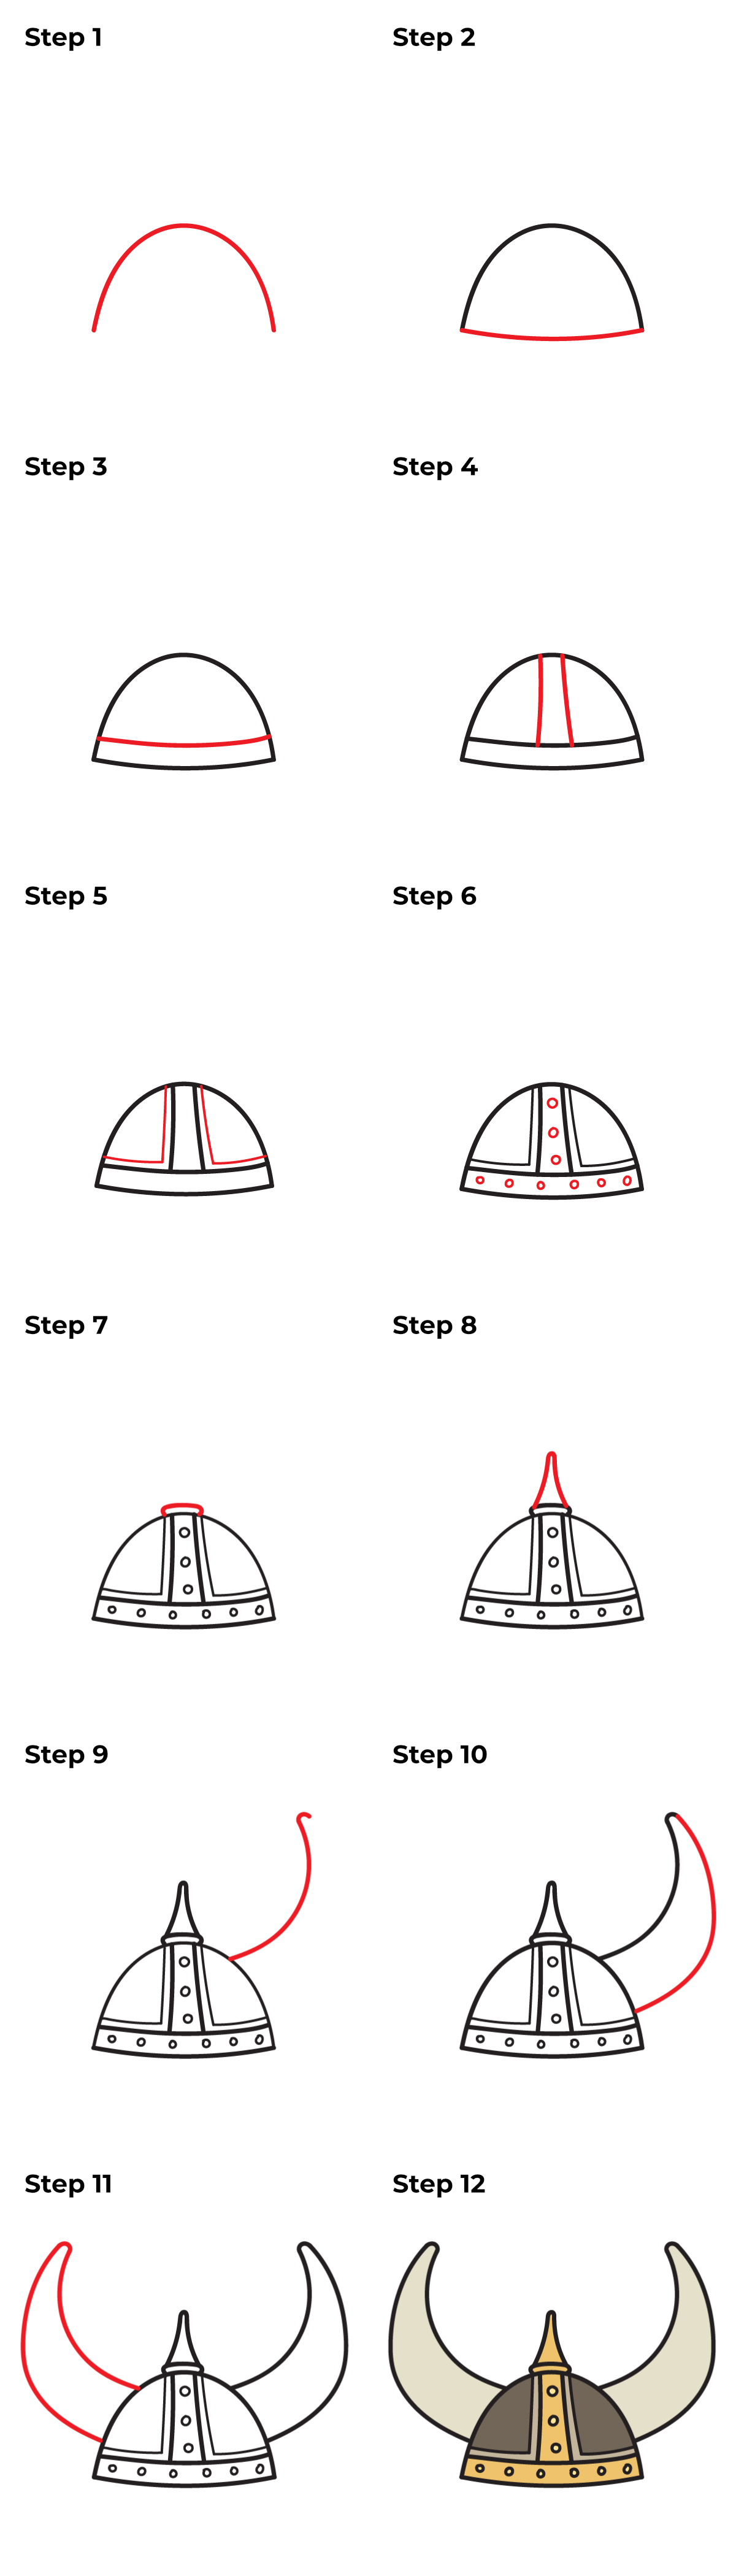 How to Draw a Viking Helmet - Printable Tutorial